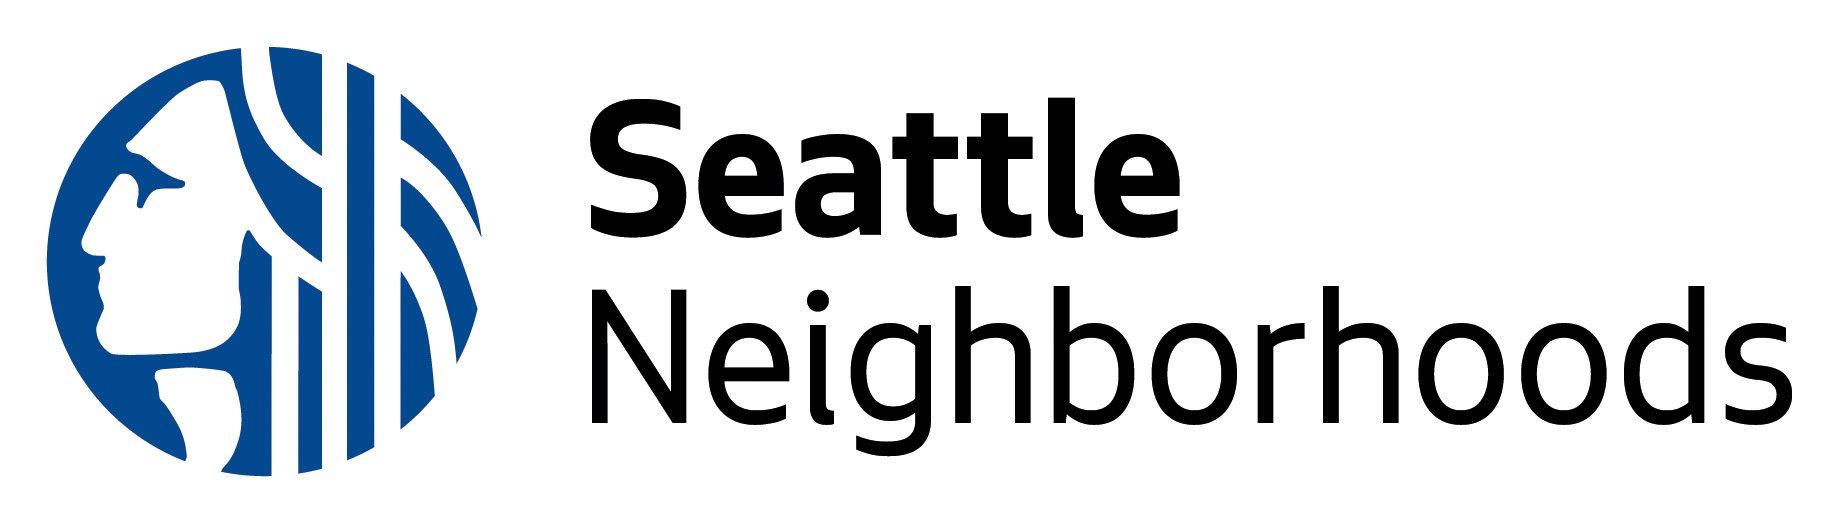 City of Seattle Department of Neighborhoods Logo